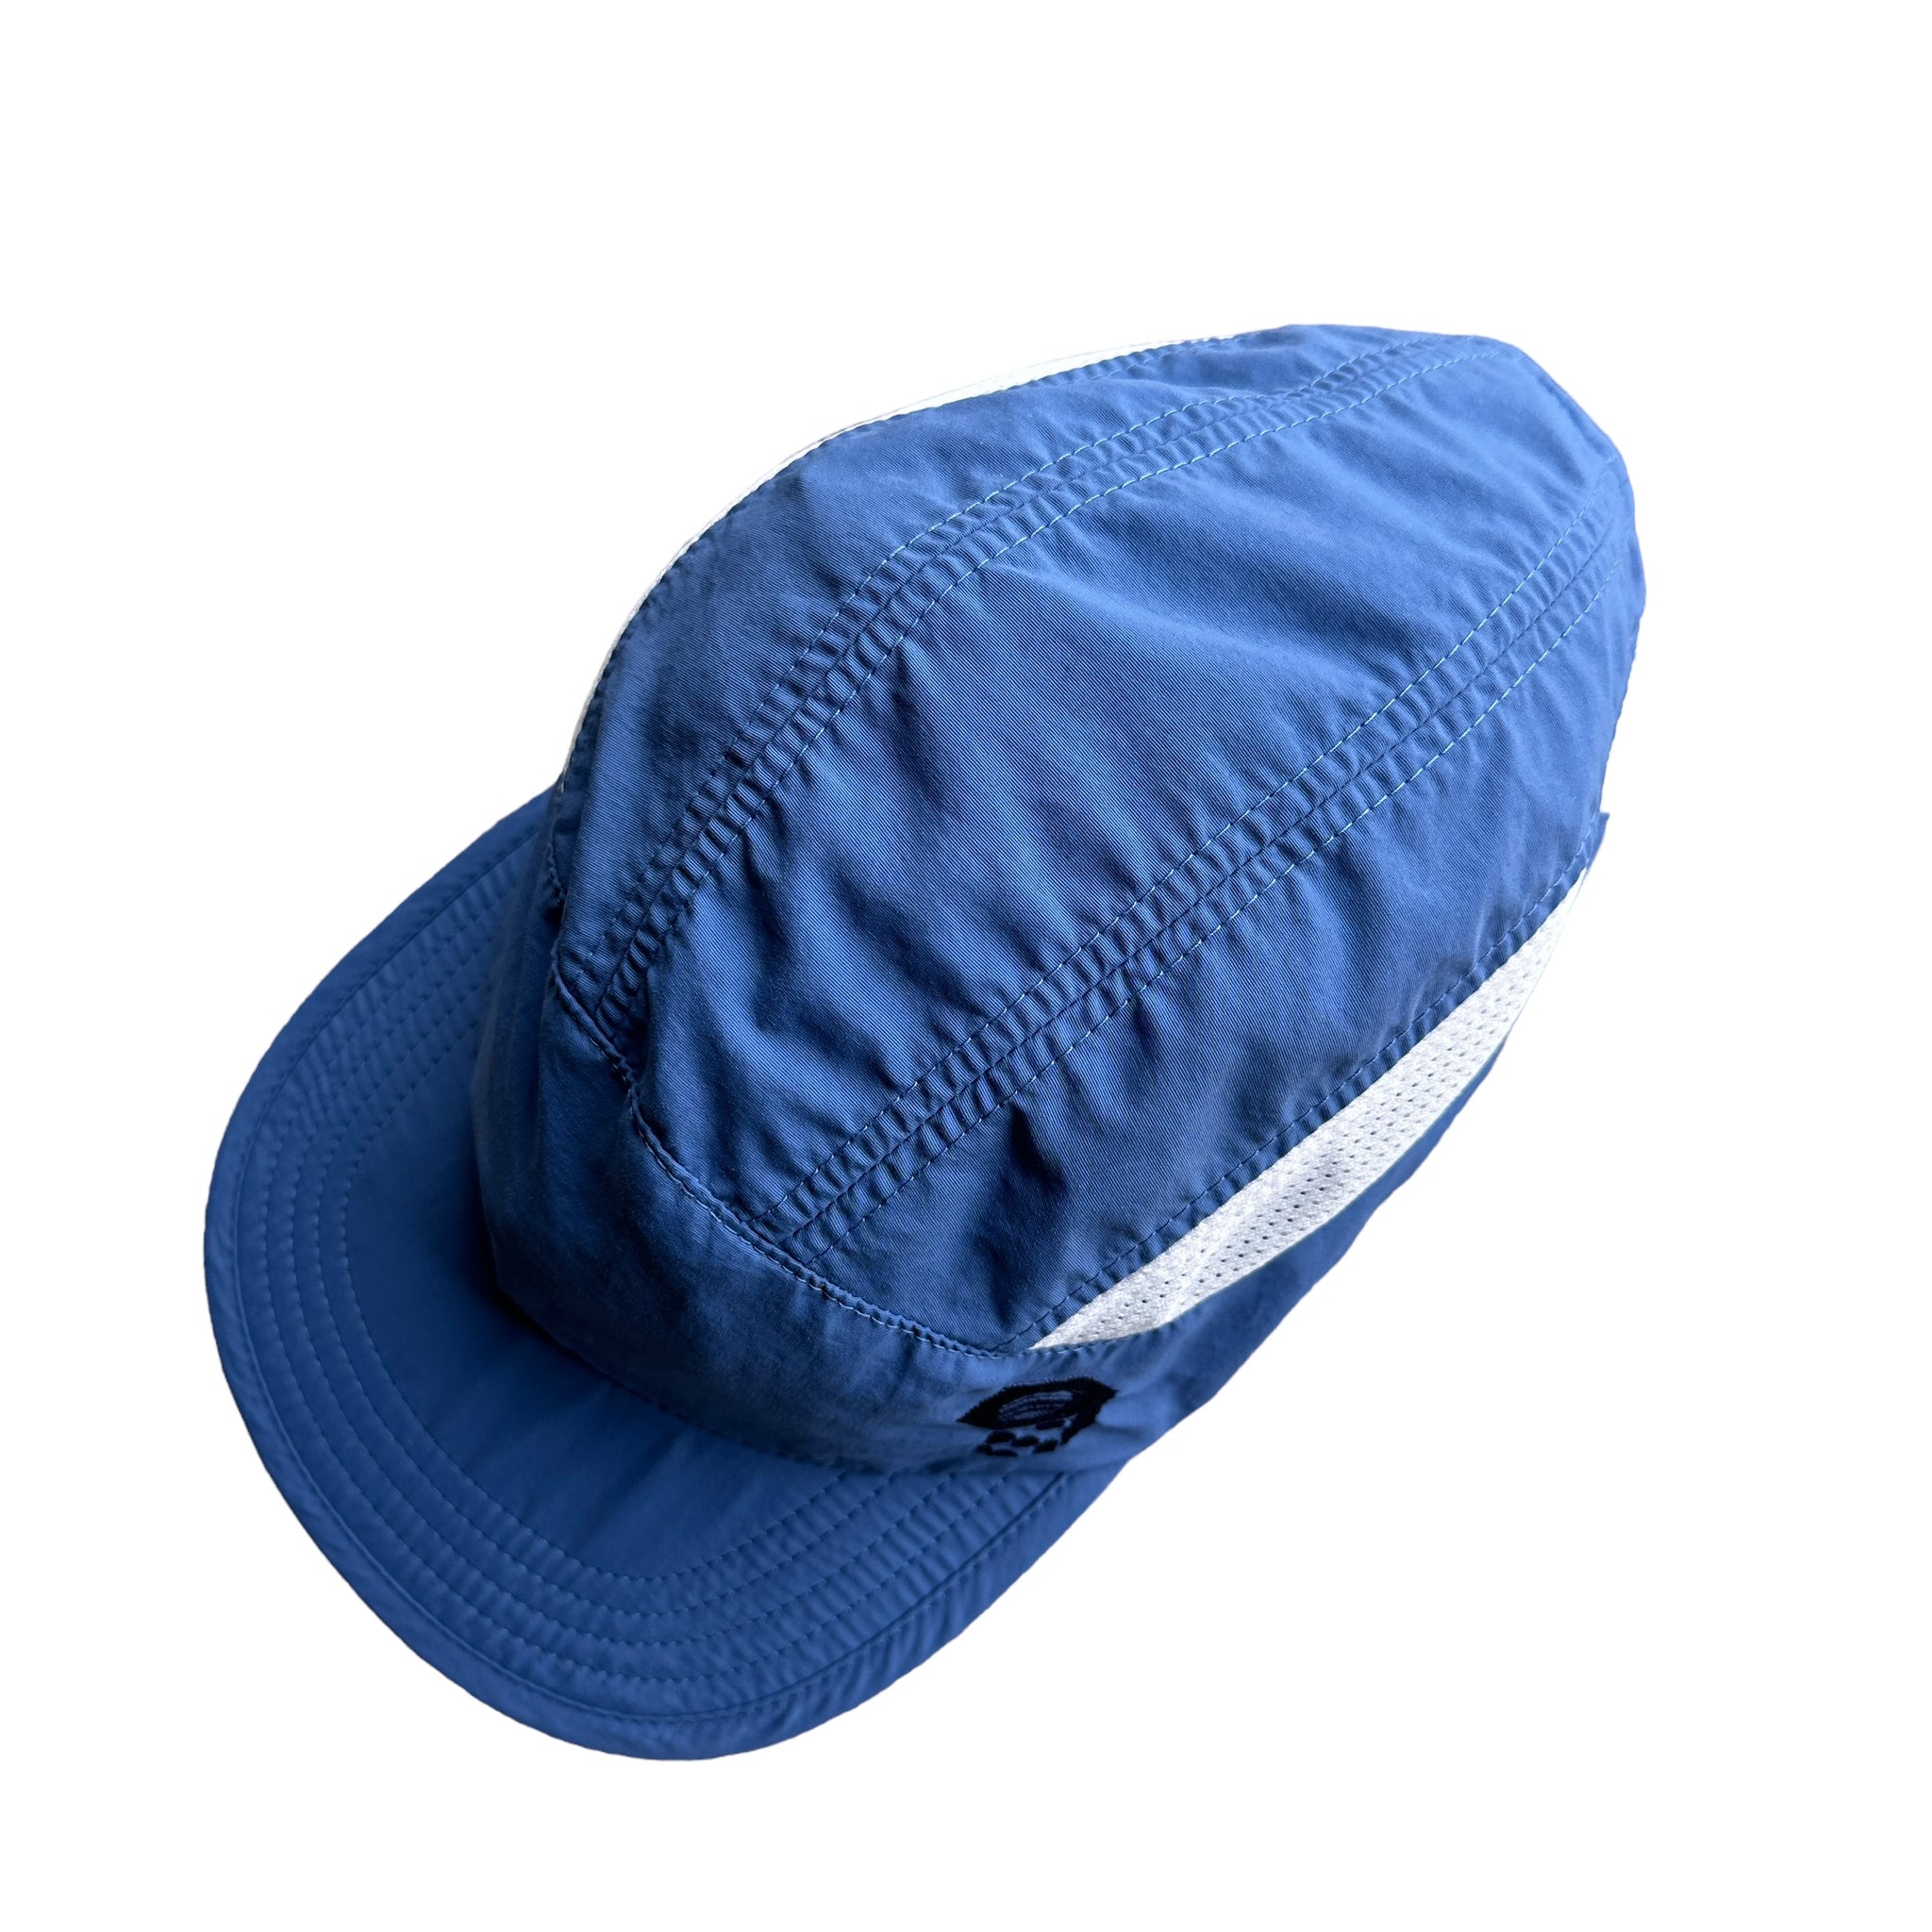 Mountain hardwear lightweight hat